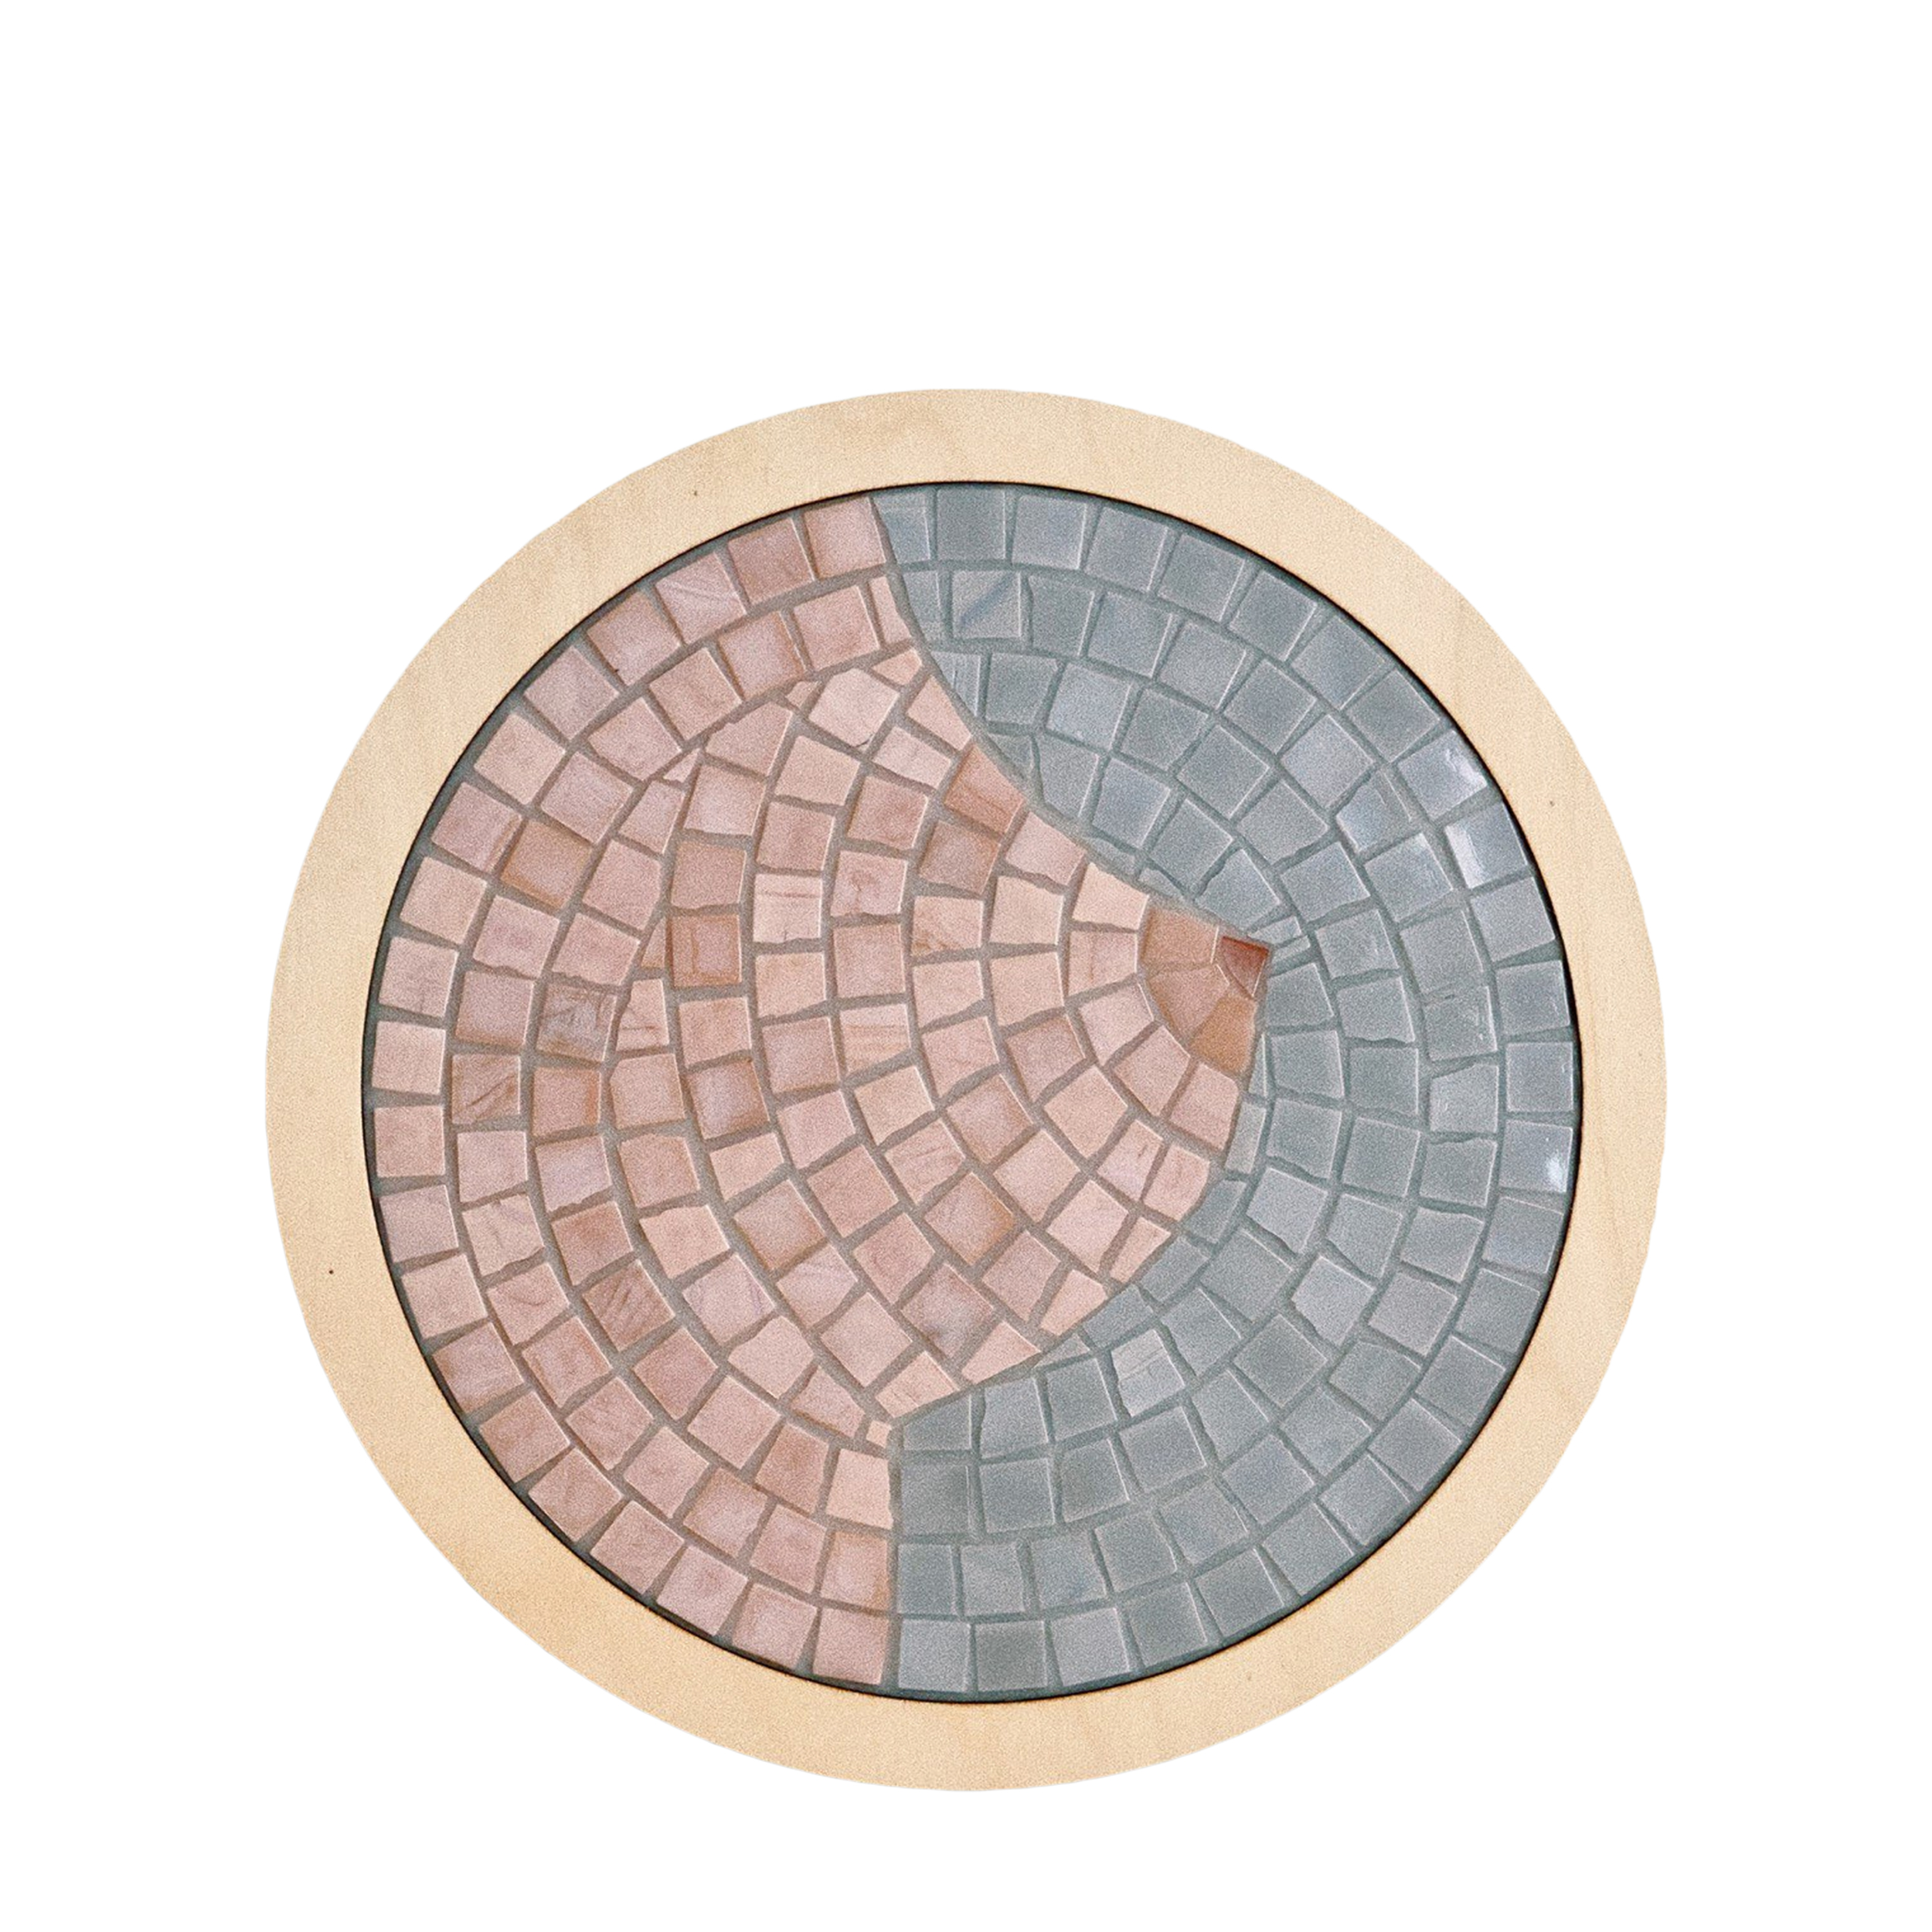 rastebina rastebina Мозаика «Грудь» на деревянной основе